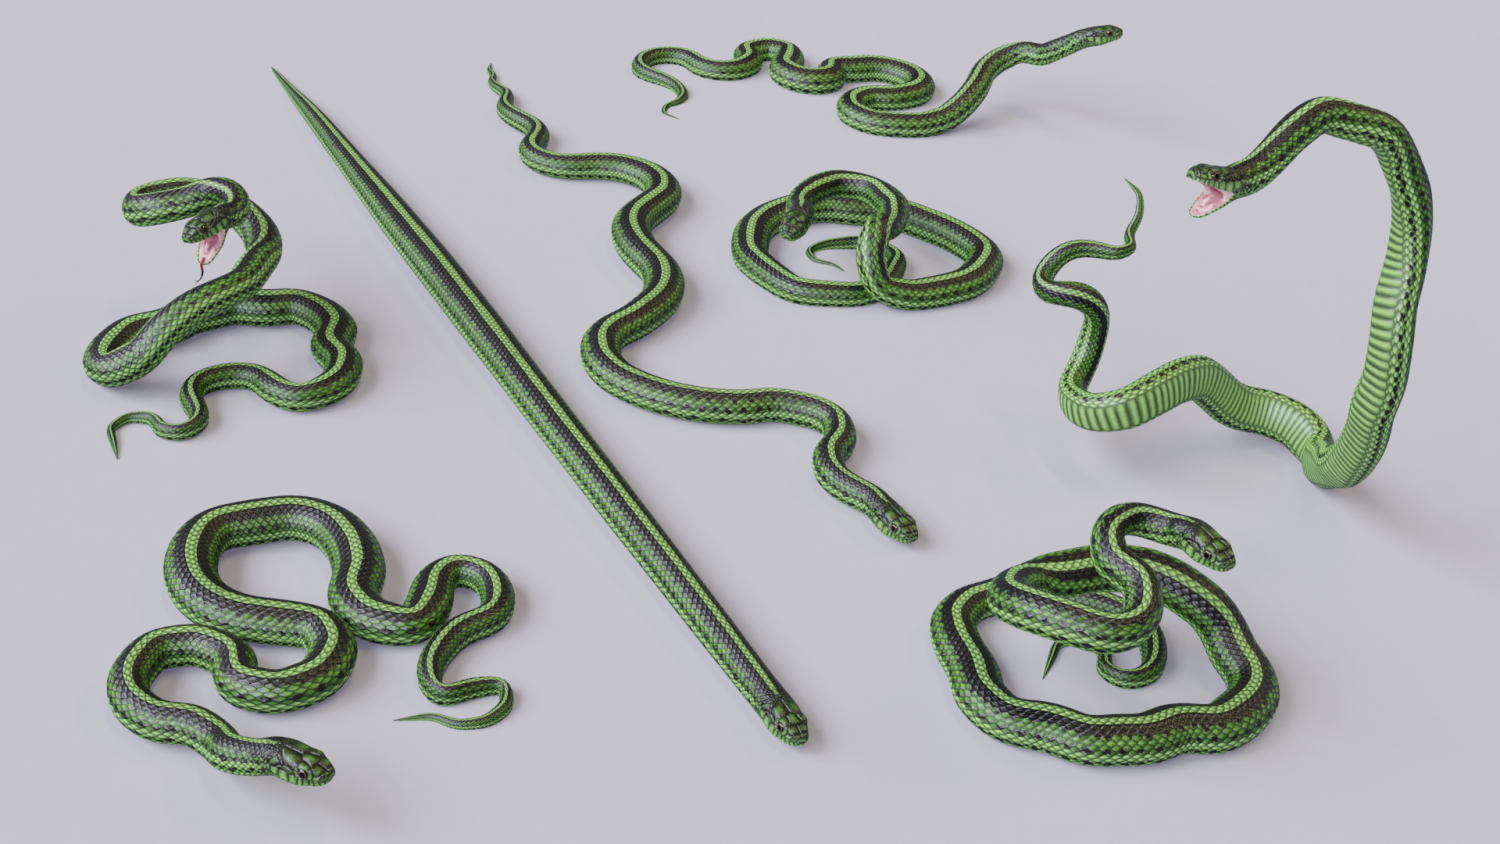 Copperhead snake 3d model. Free download.